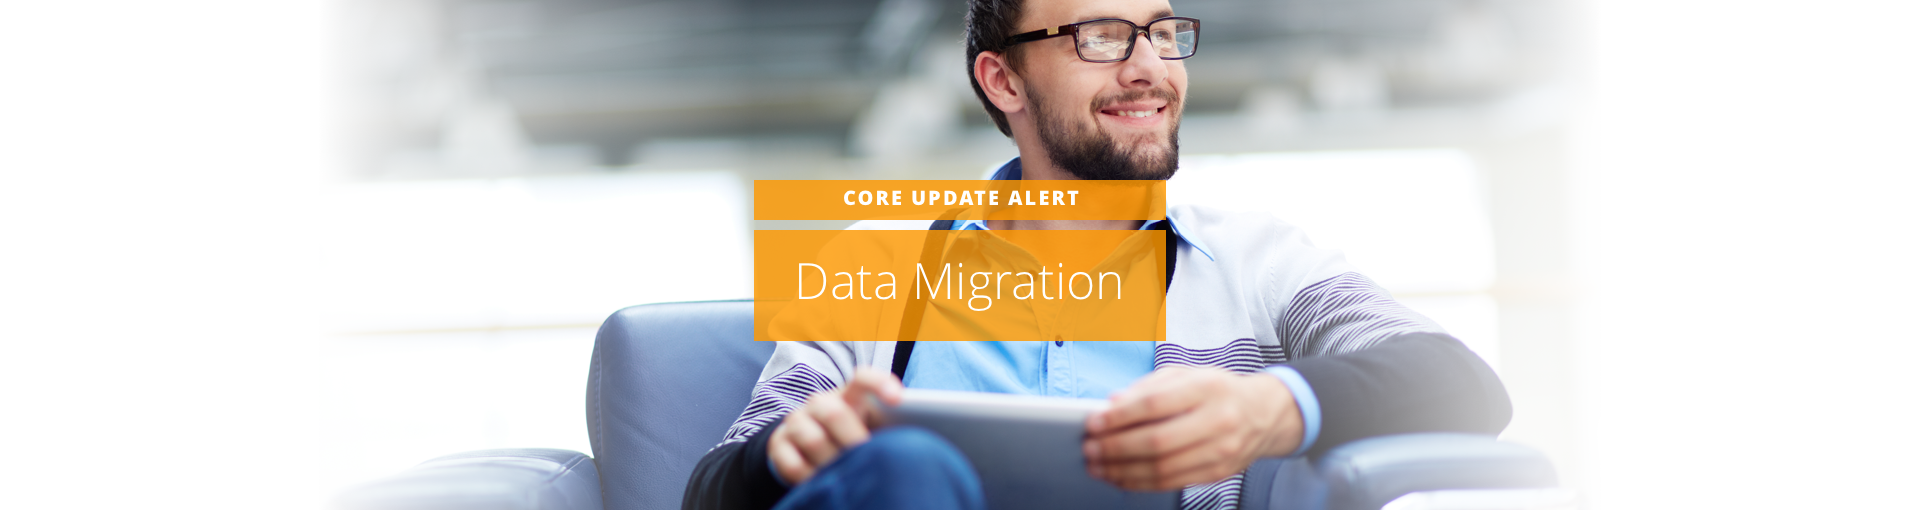 CORE Update Alert: Data Migration Featured Image